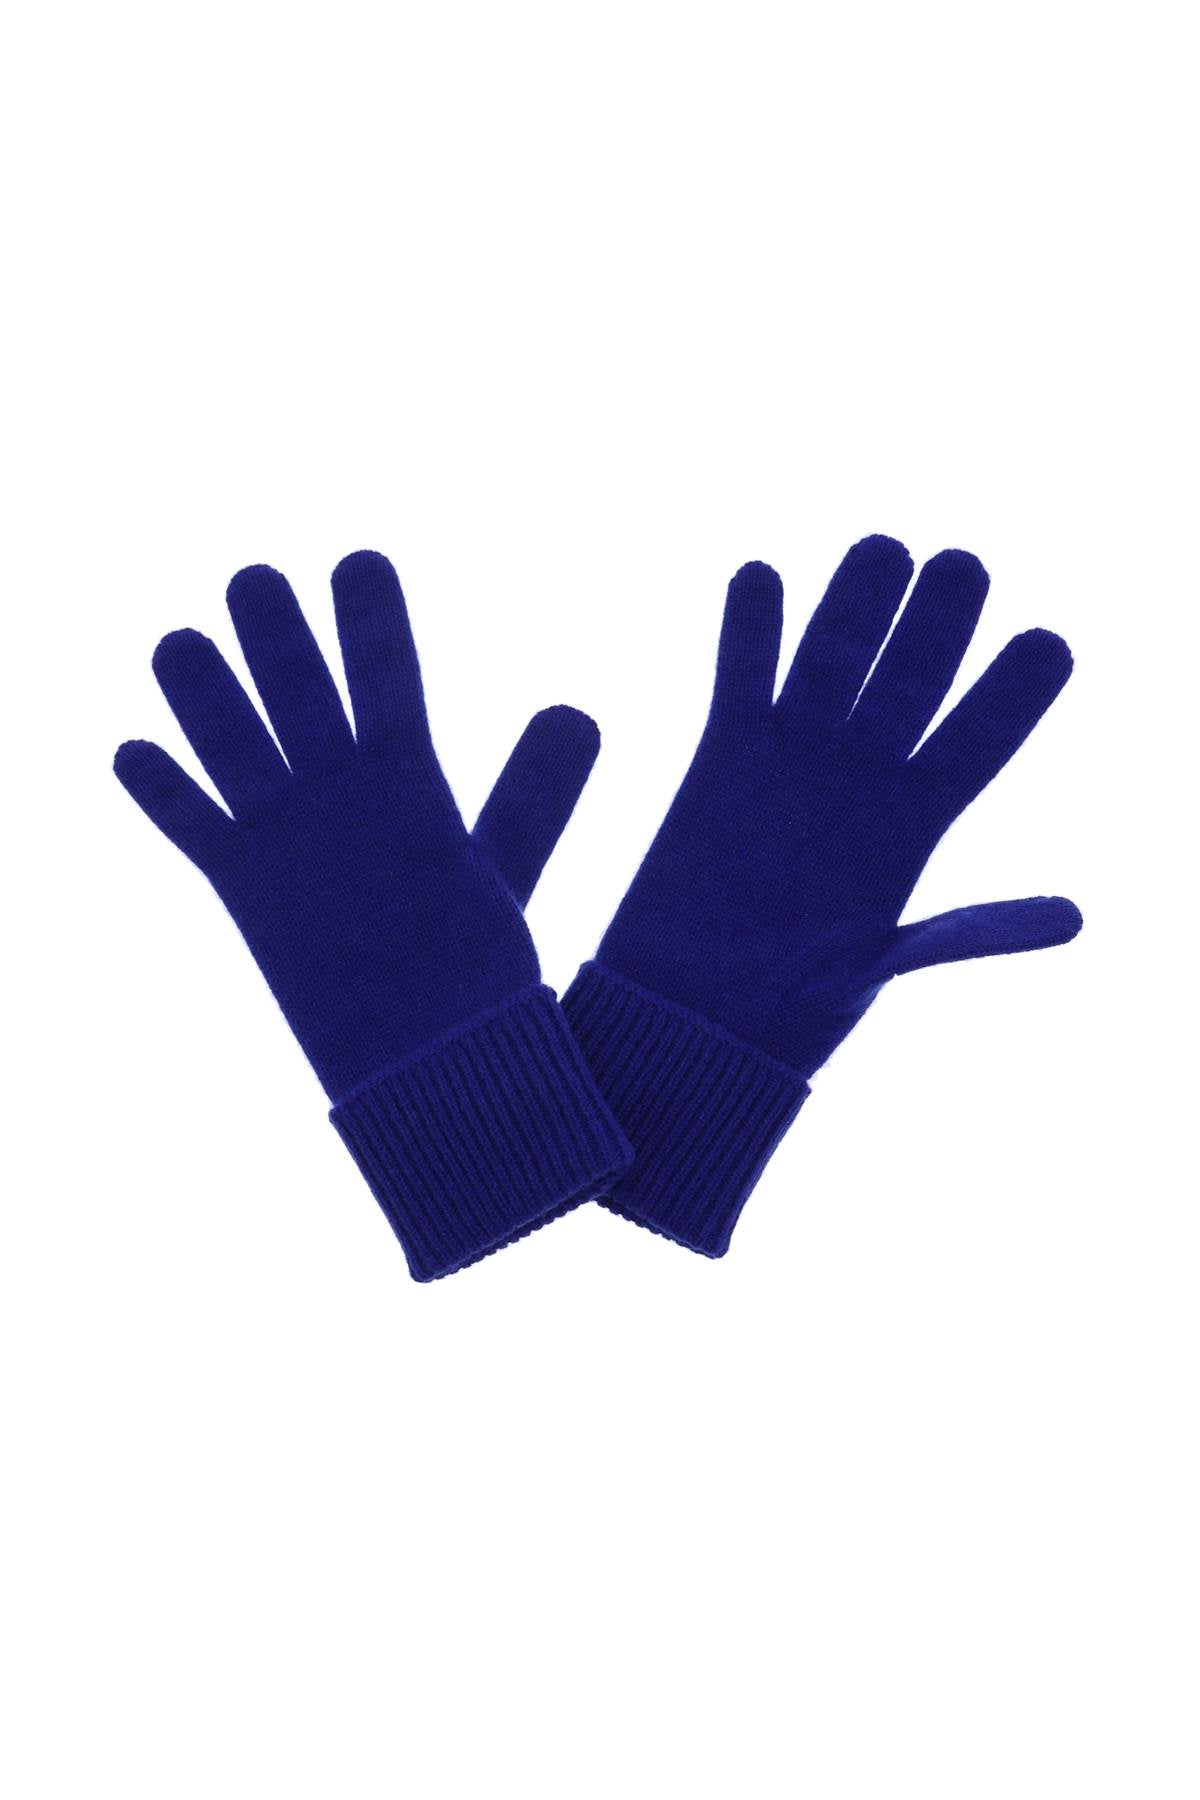 Burberry Burberry cashmere gloves